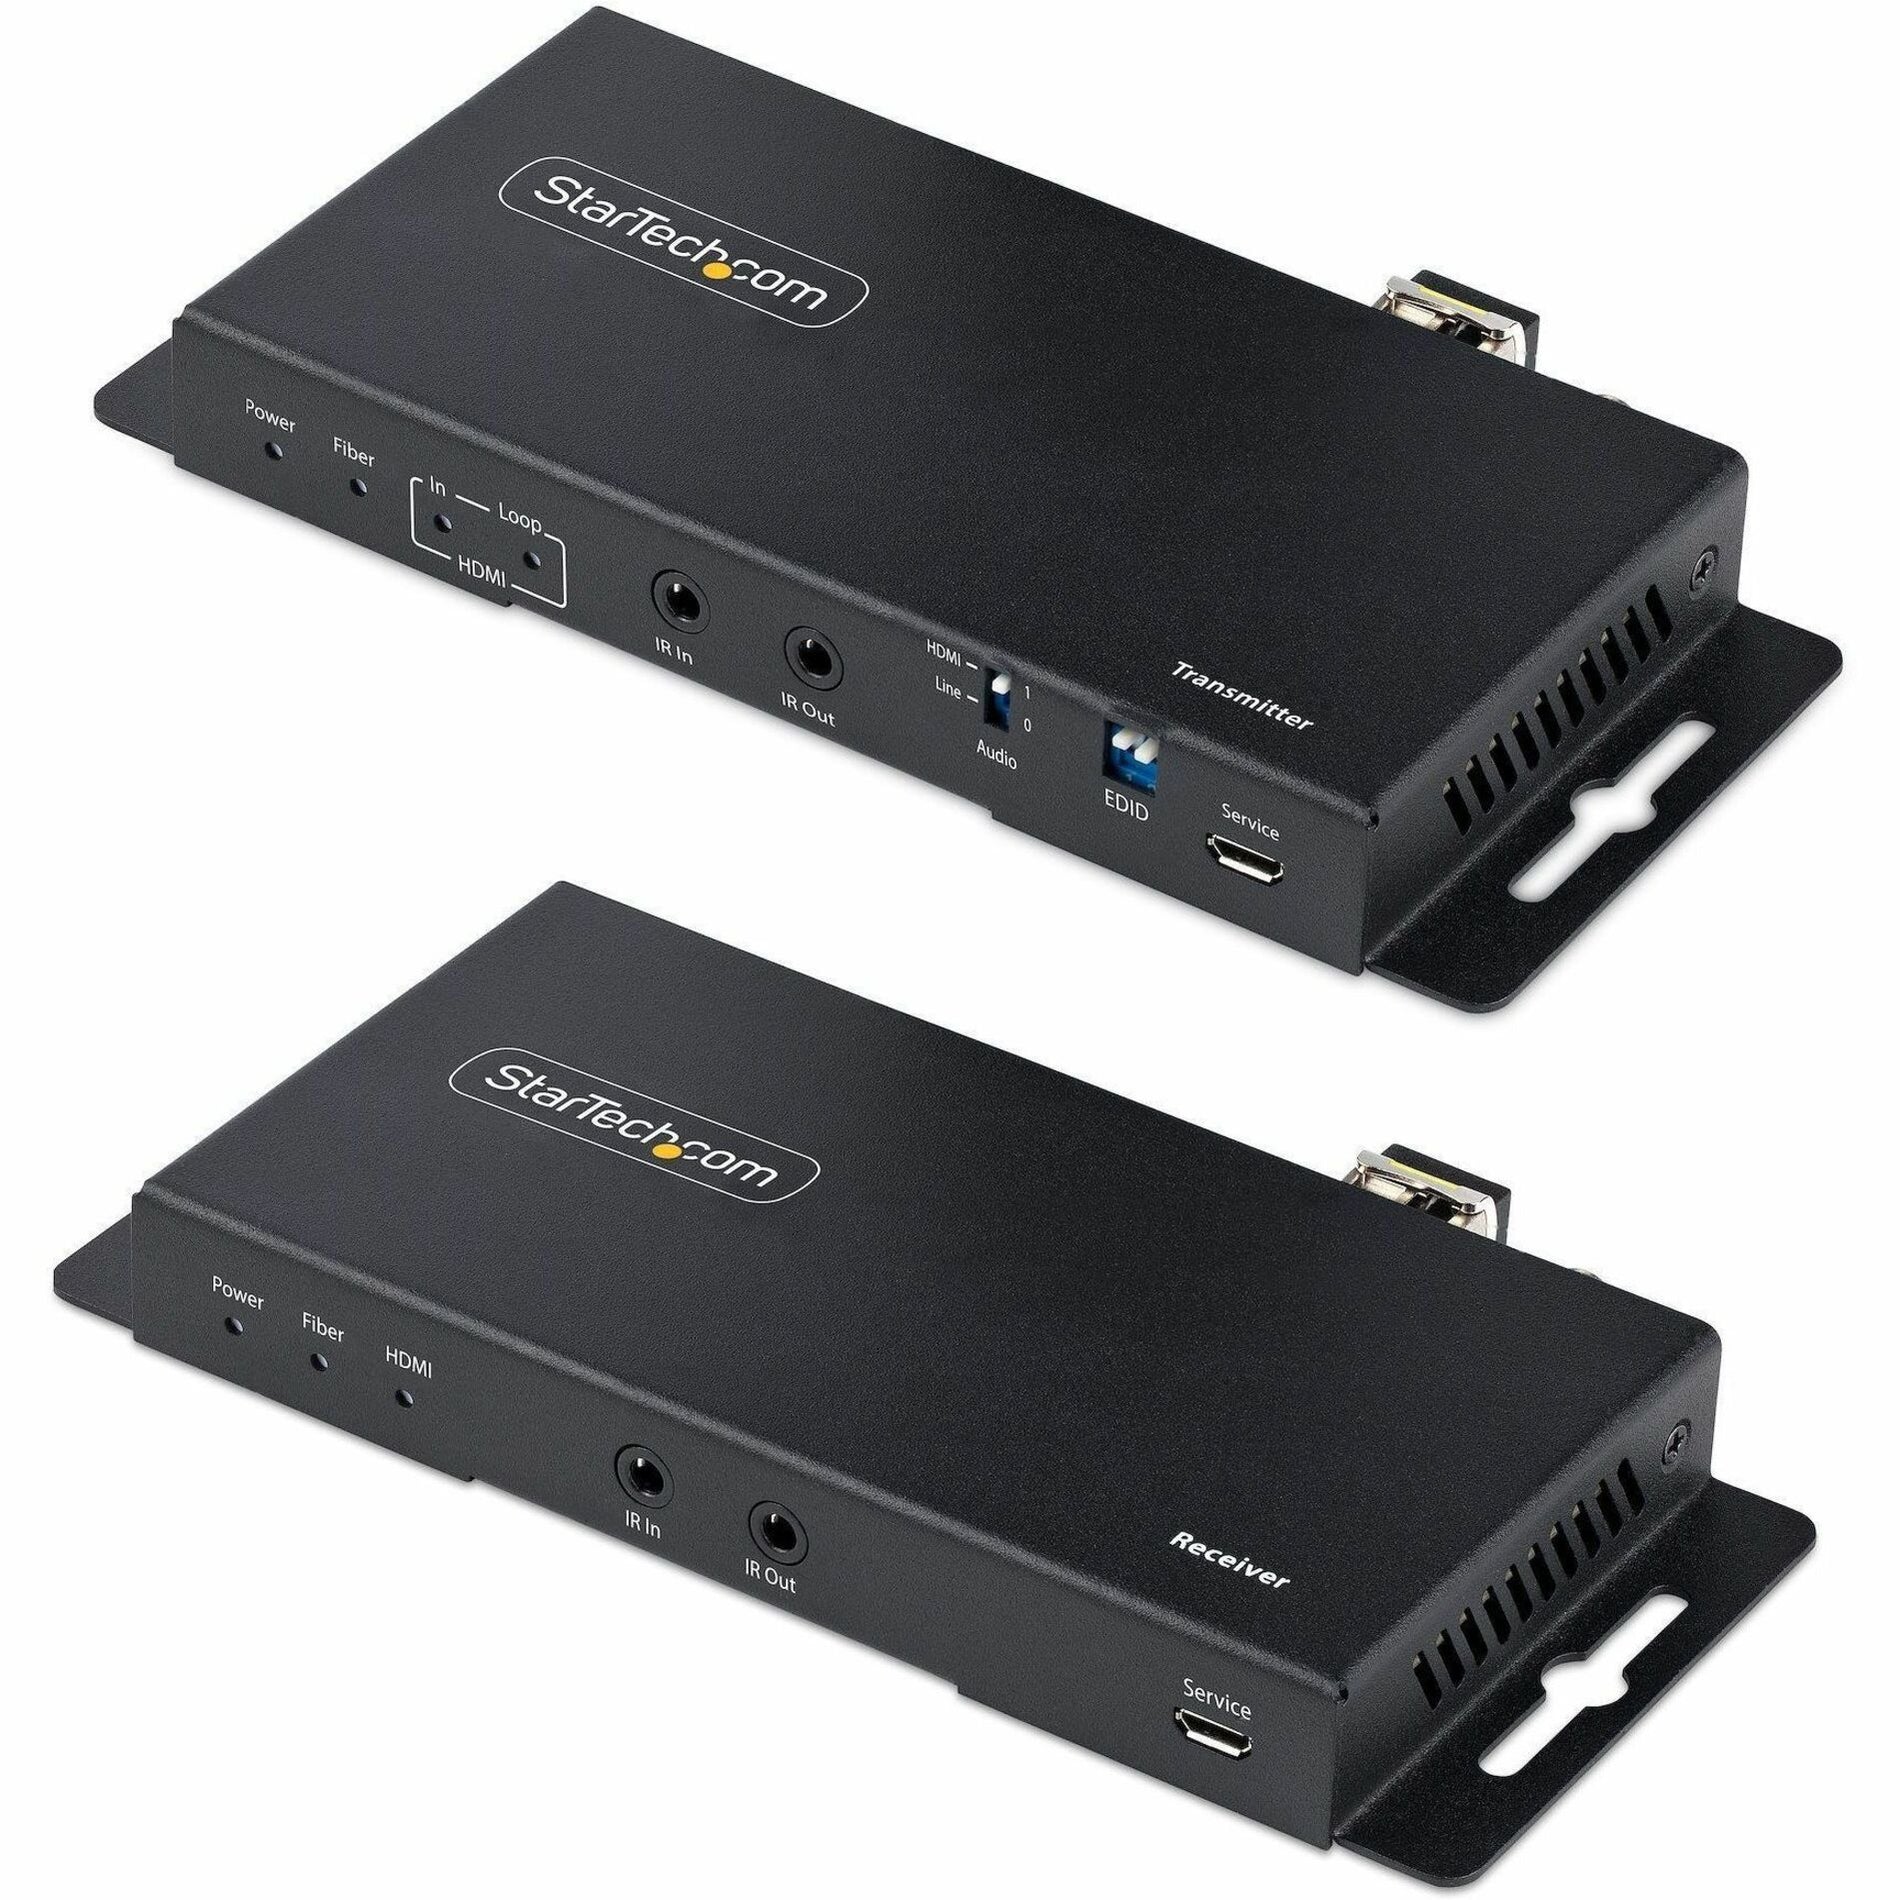 StarTech.com ST121HD20FXA2 Video Extender Transmitter/Receiver, 4K UHD, 2 Year Warranty, USB, HDMI In/Out, Optical Fiber, 3300 ft Maximum Operating Distance